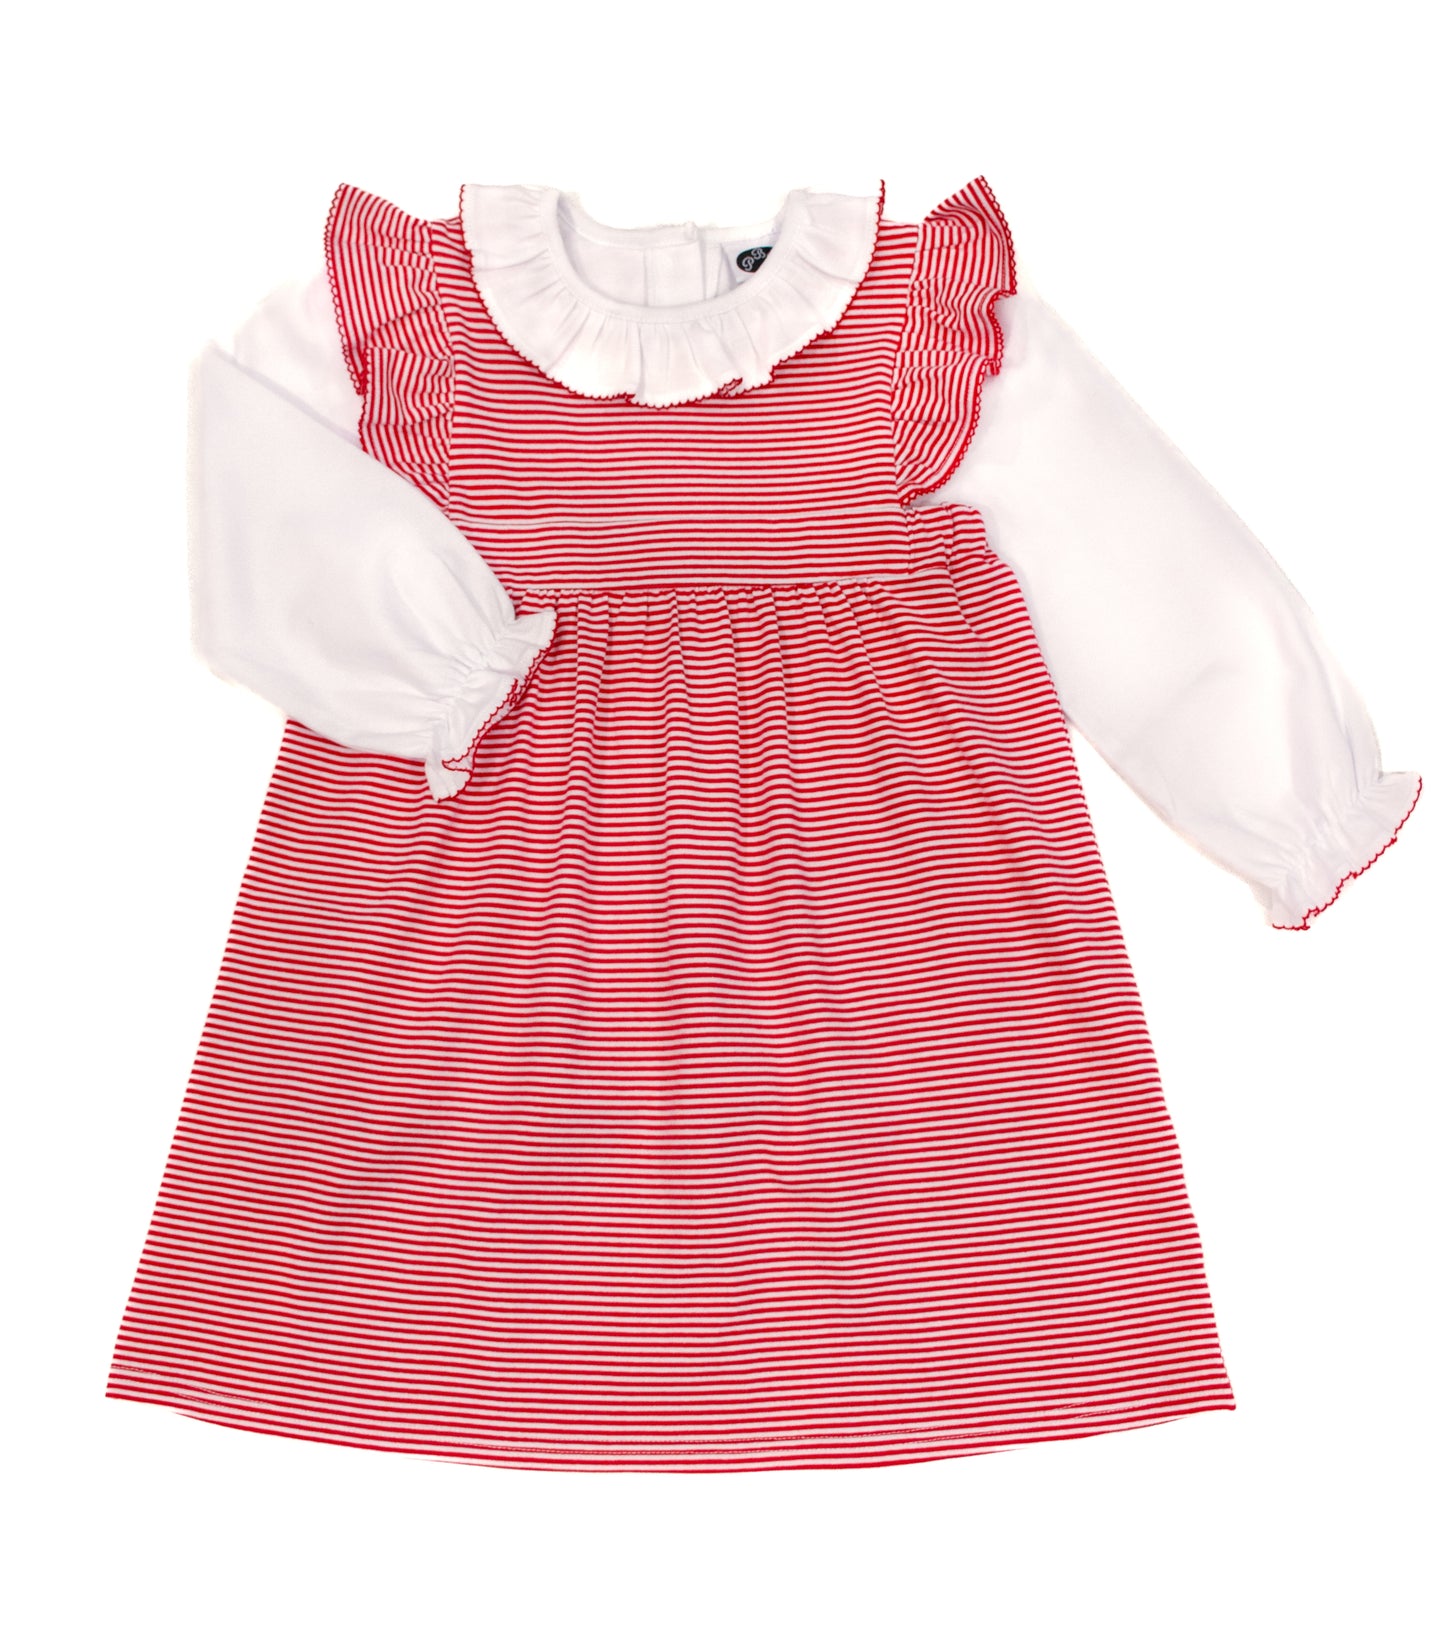 Whitney Dress Red Stripes - Preorder*